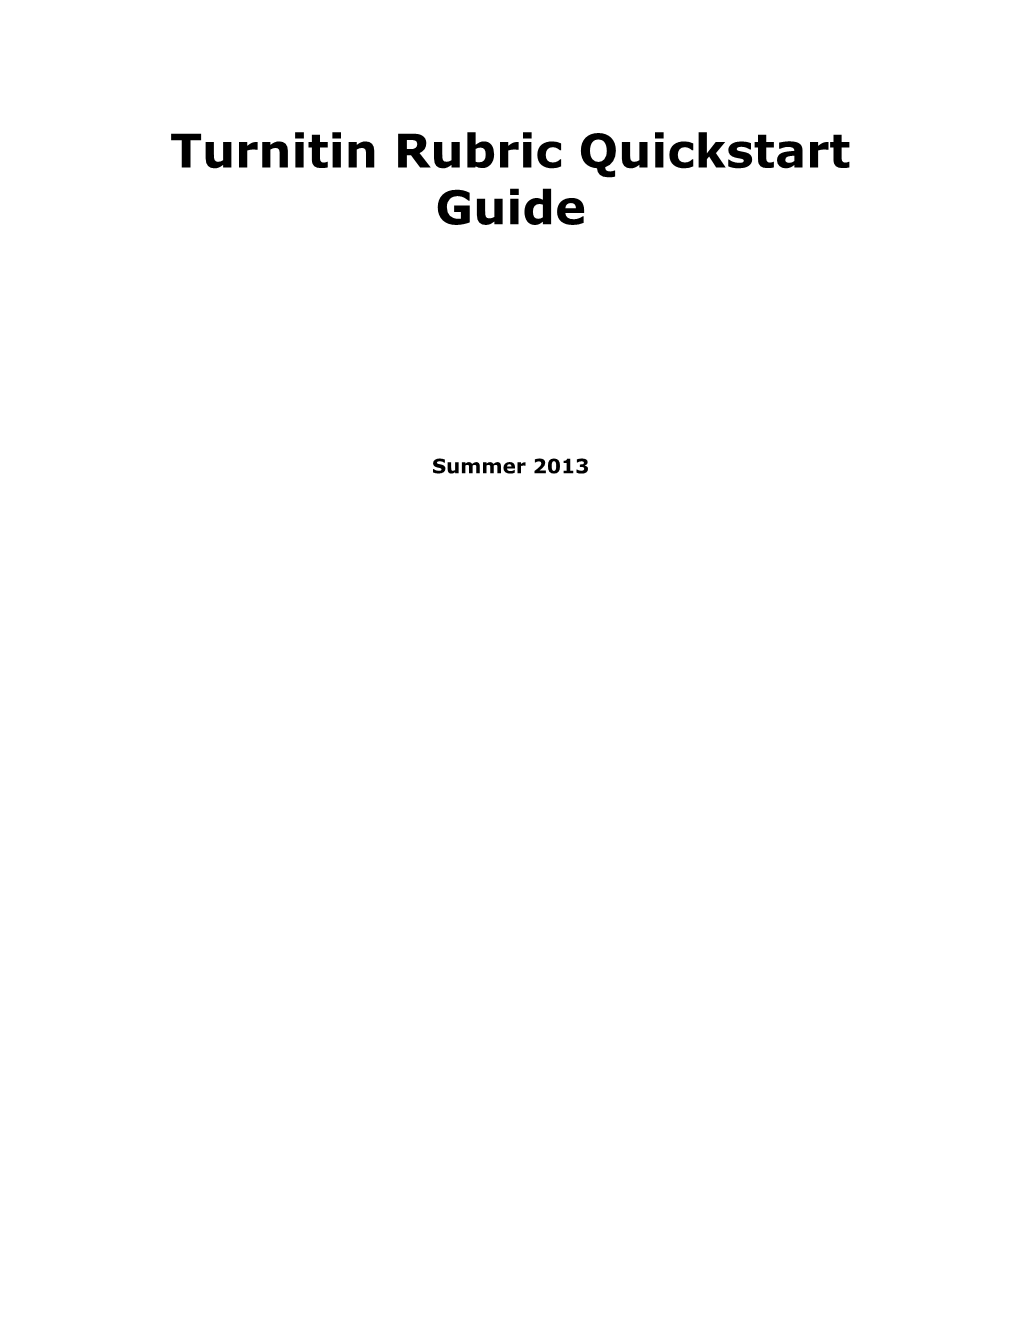 Turnitin Rubric Quickstart Guide